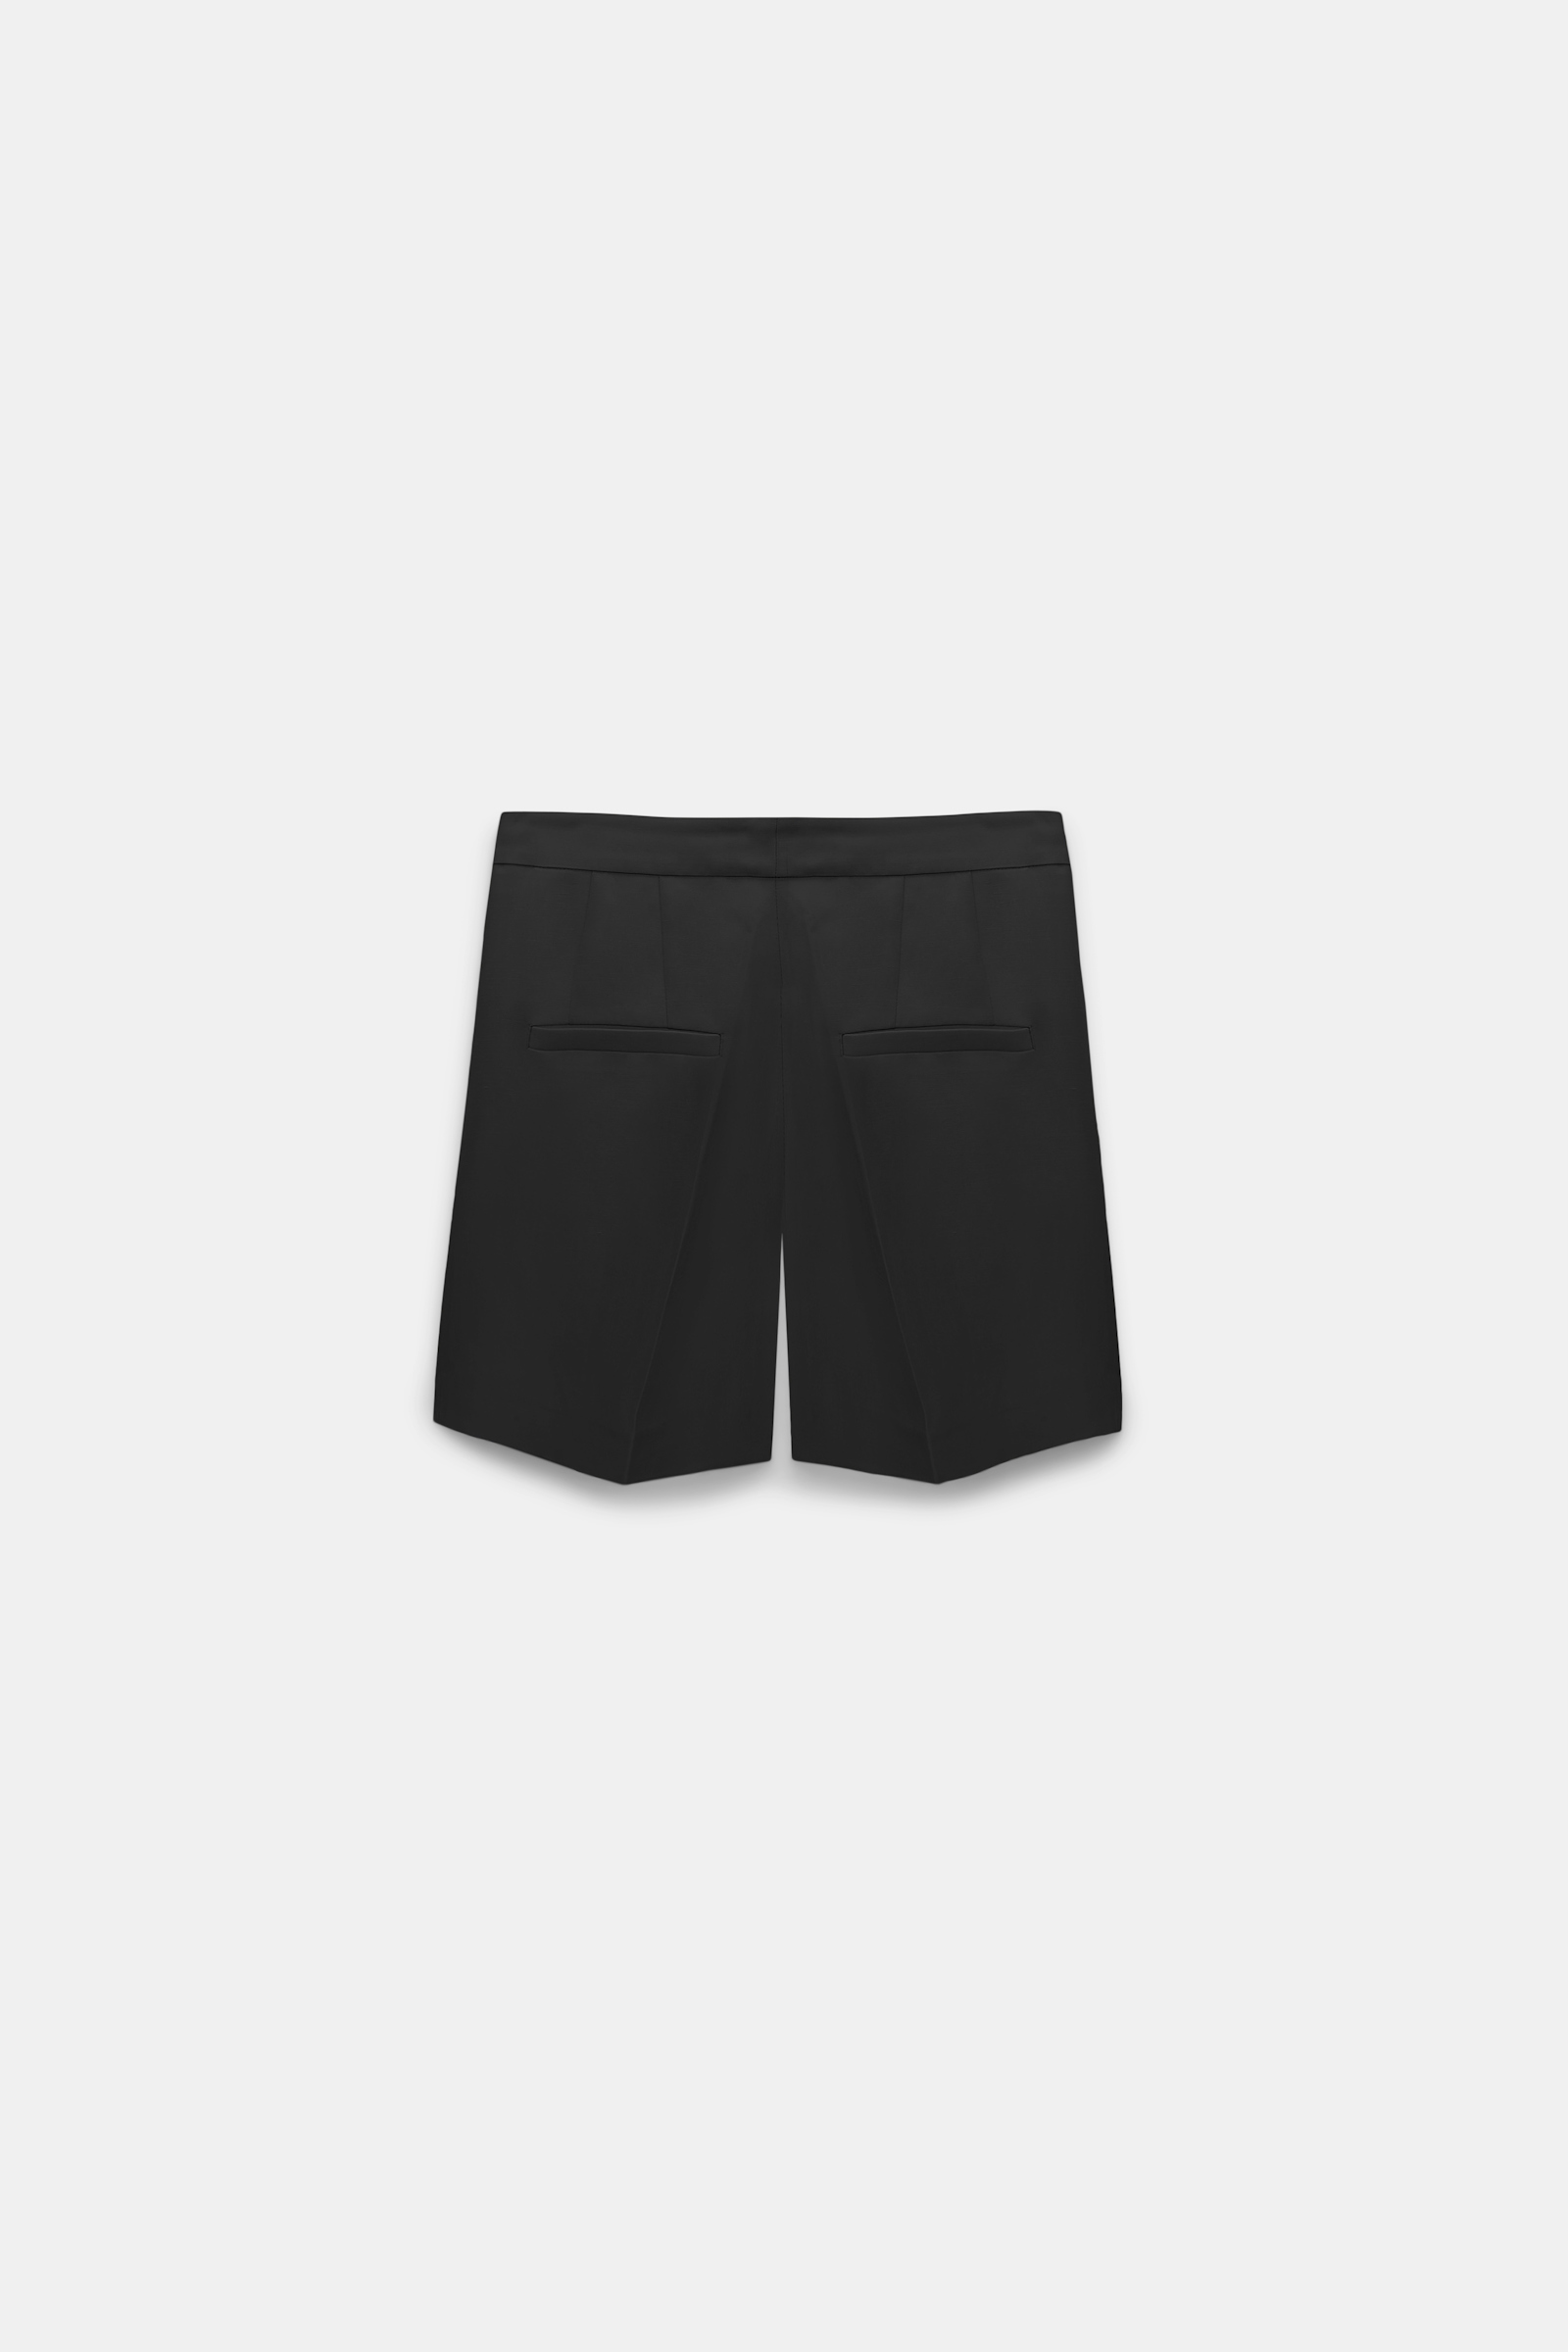 Dorothee Schumacher Wide leg linen blend shorts with front pleats pure black